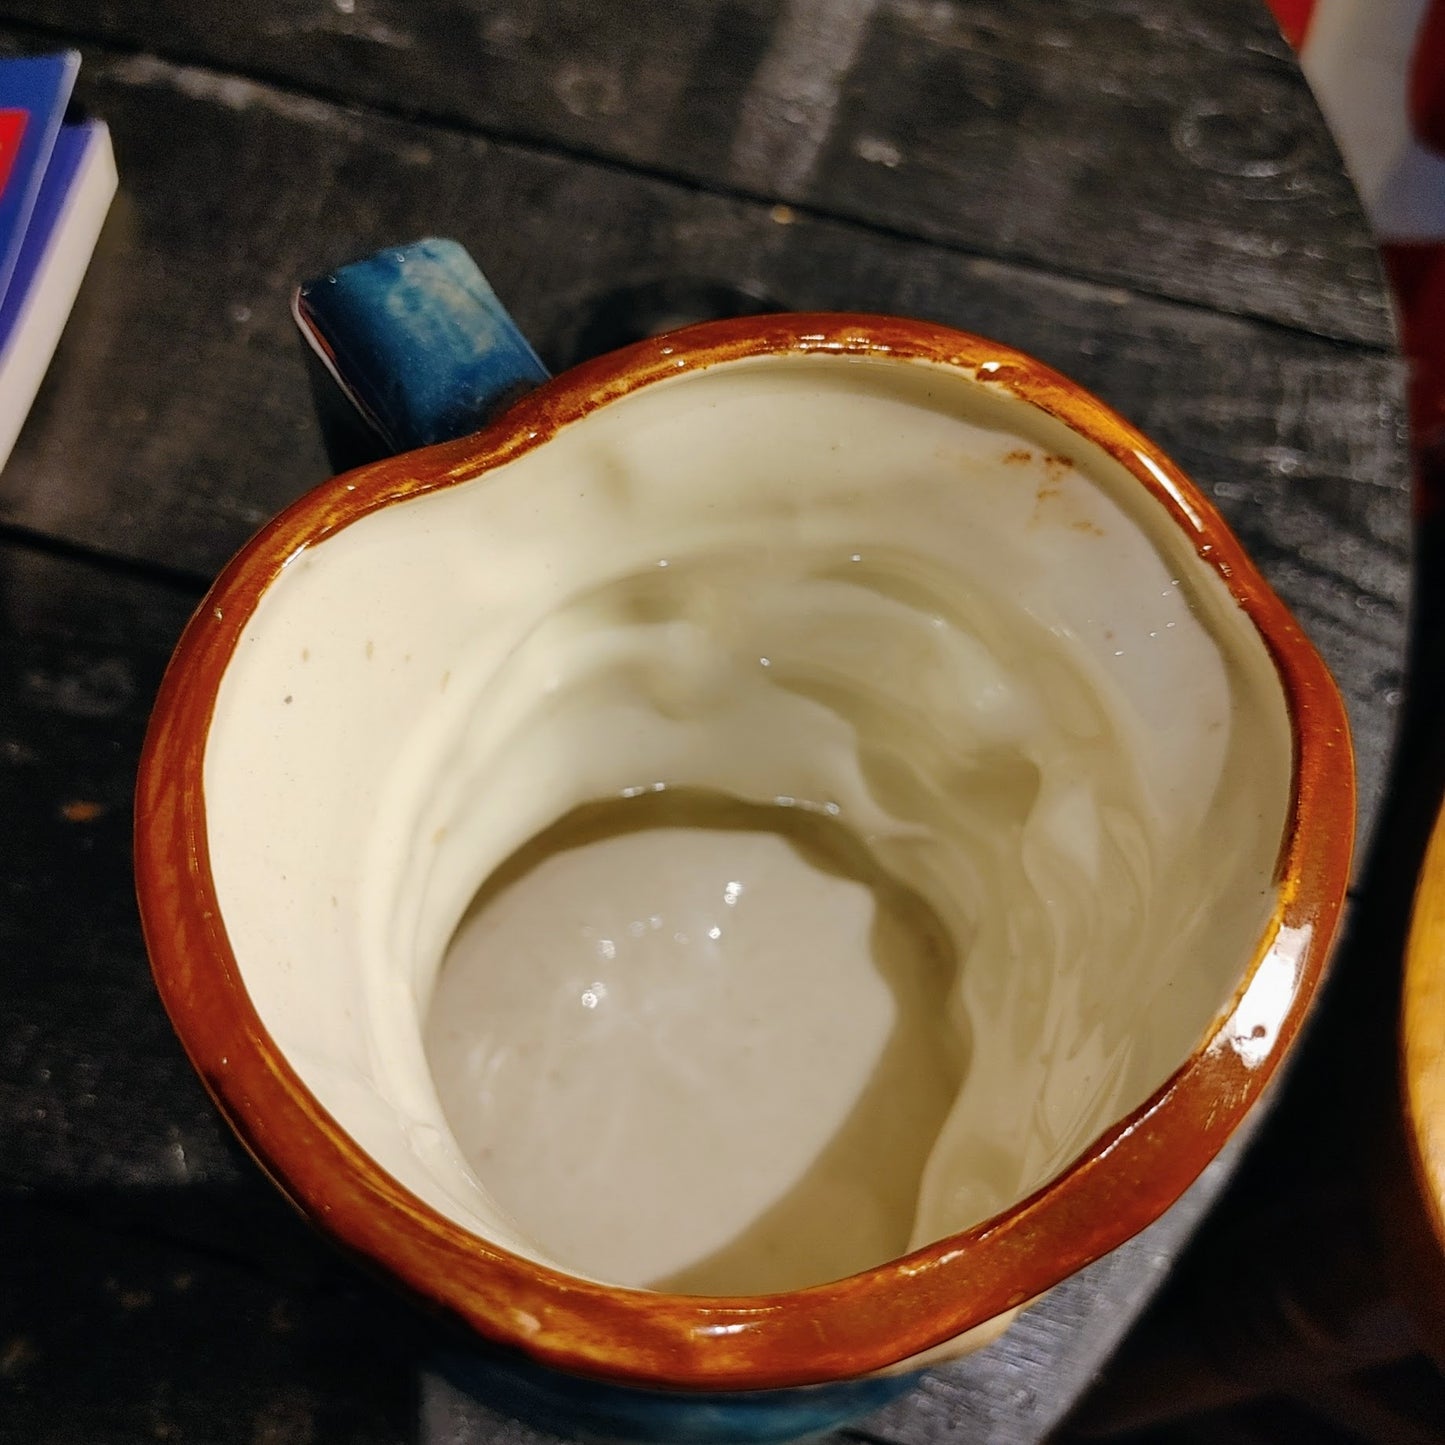 Pirate Mug cup